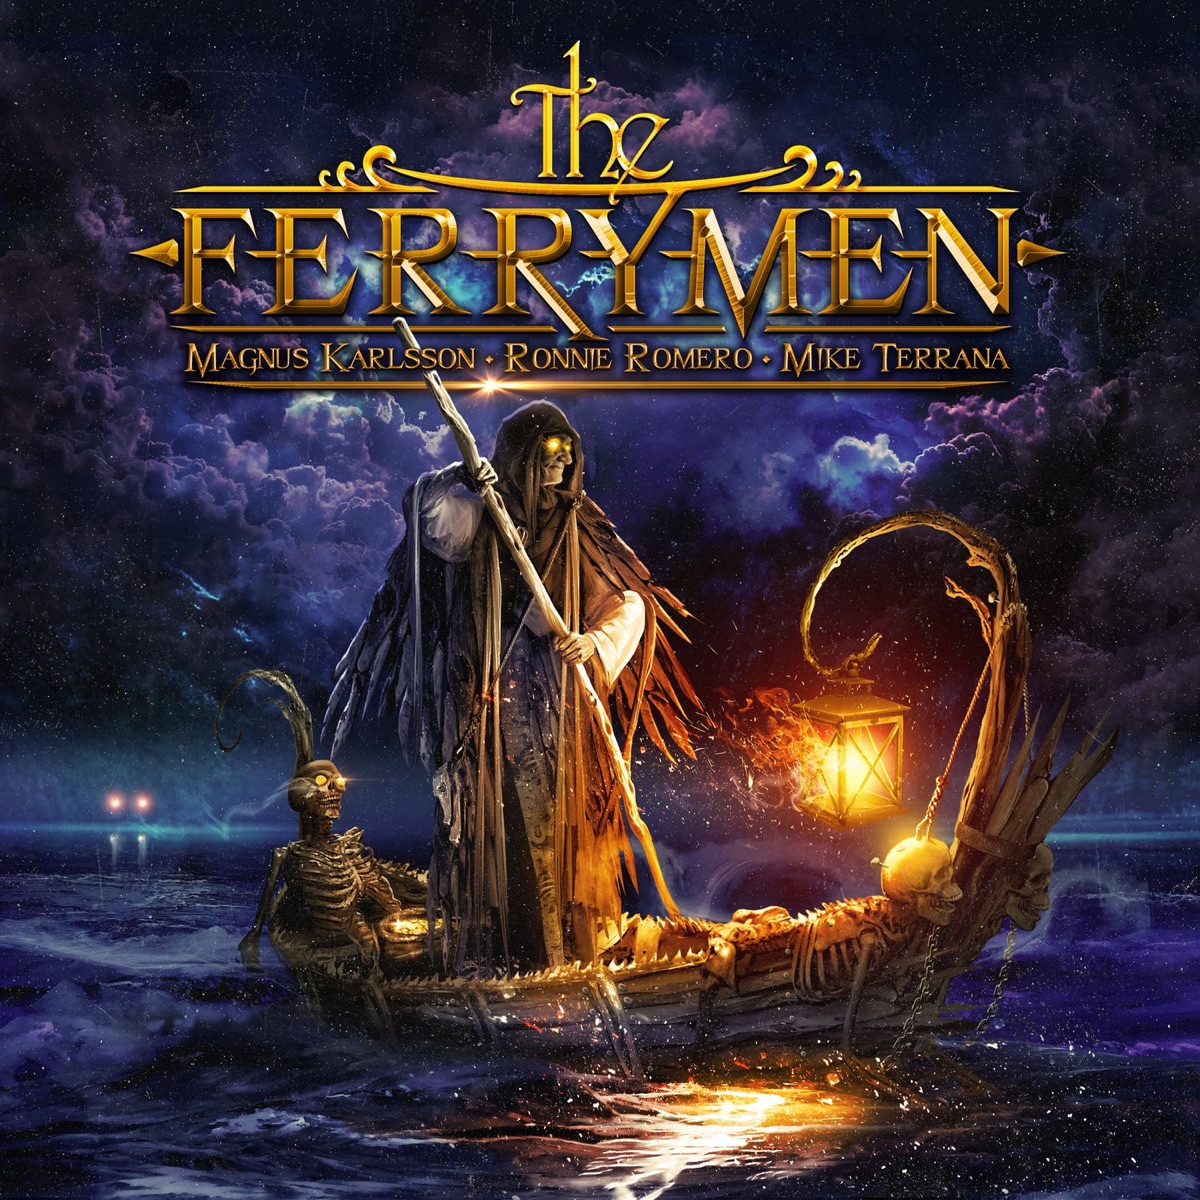 The Ferrymen - Album by The Ferrymen - Apple Music